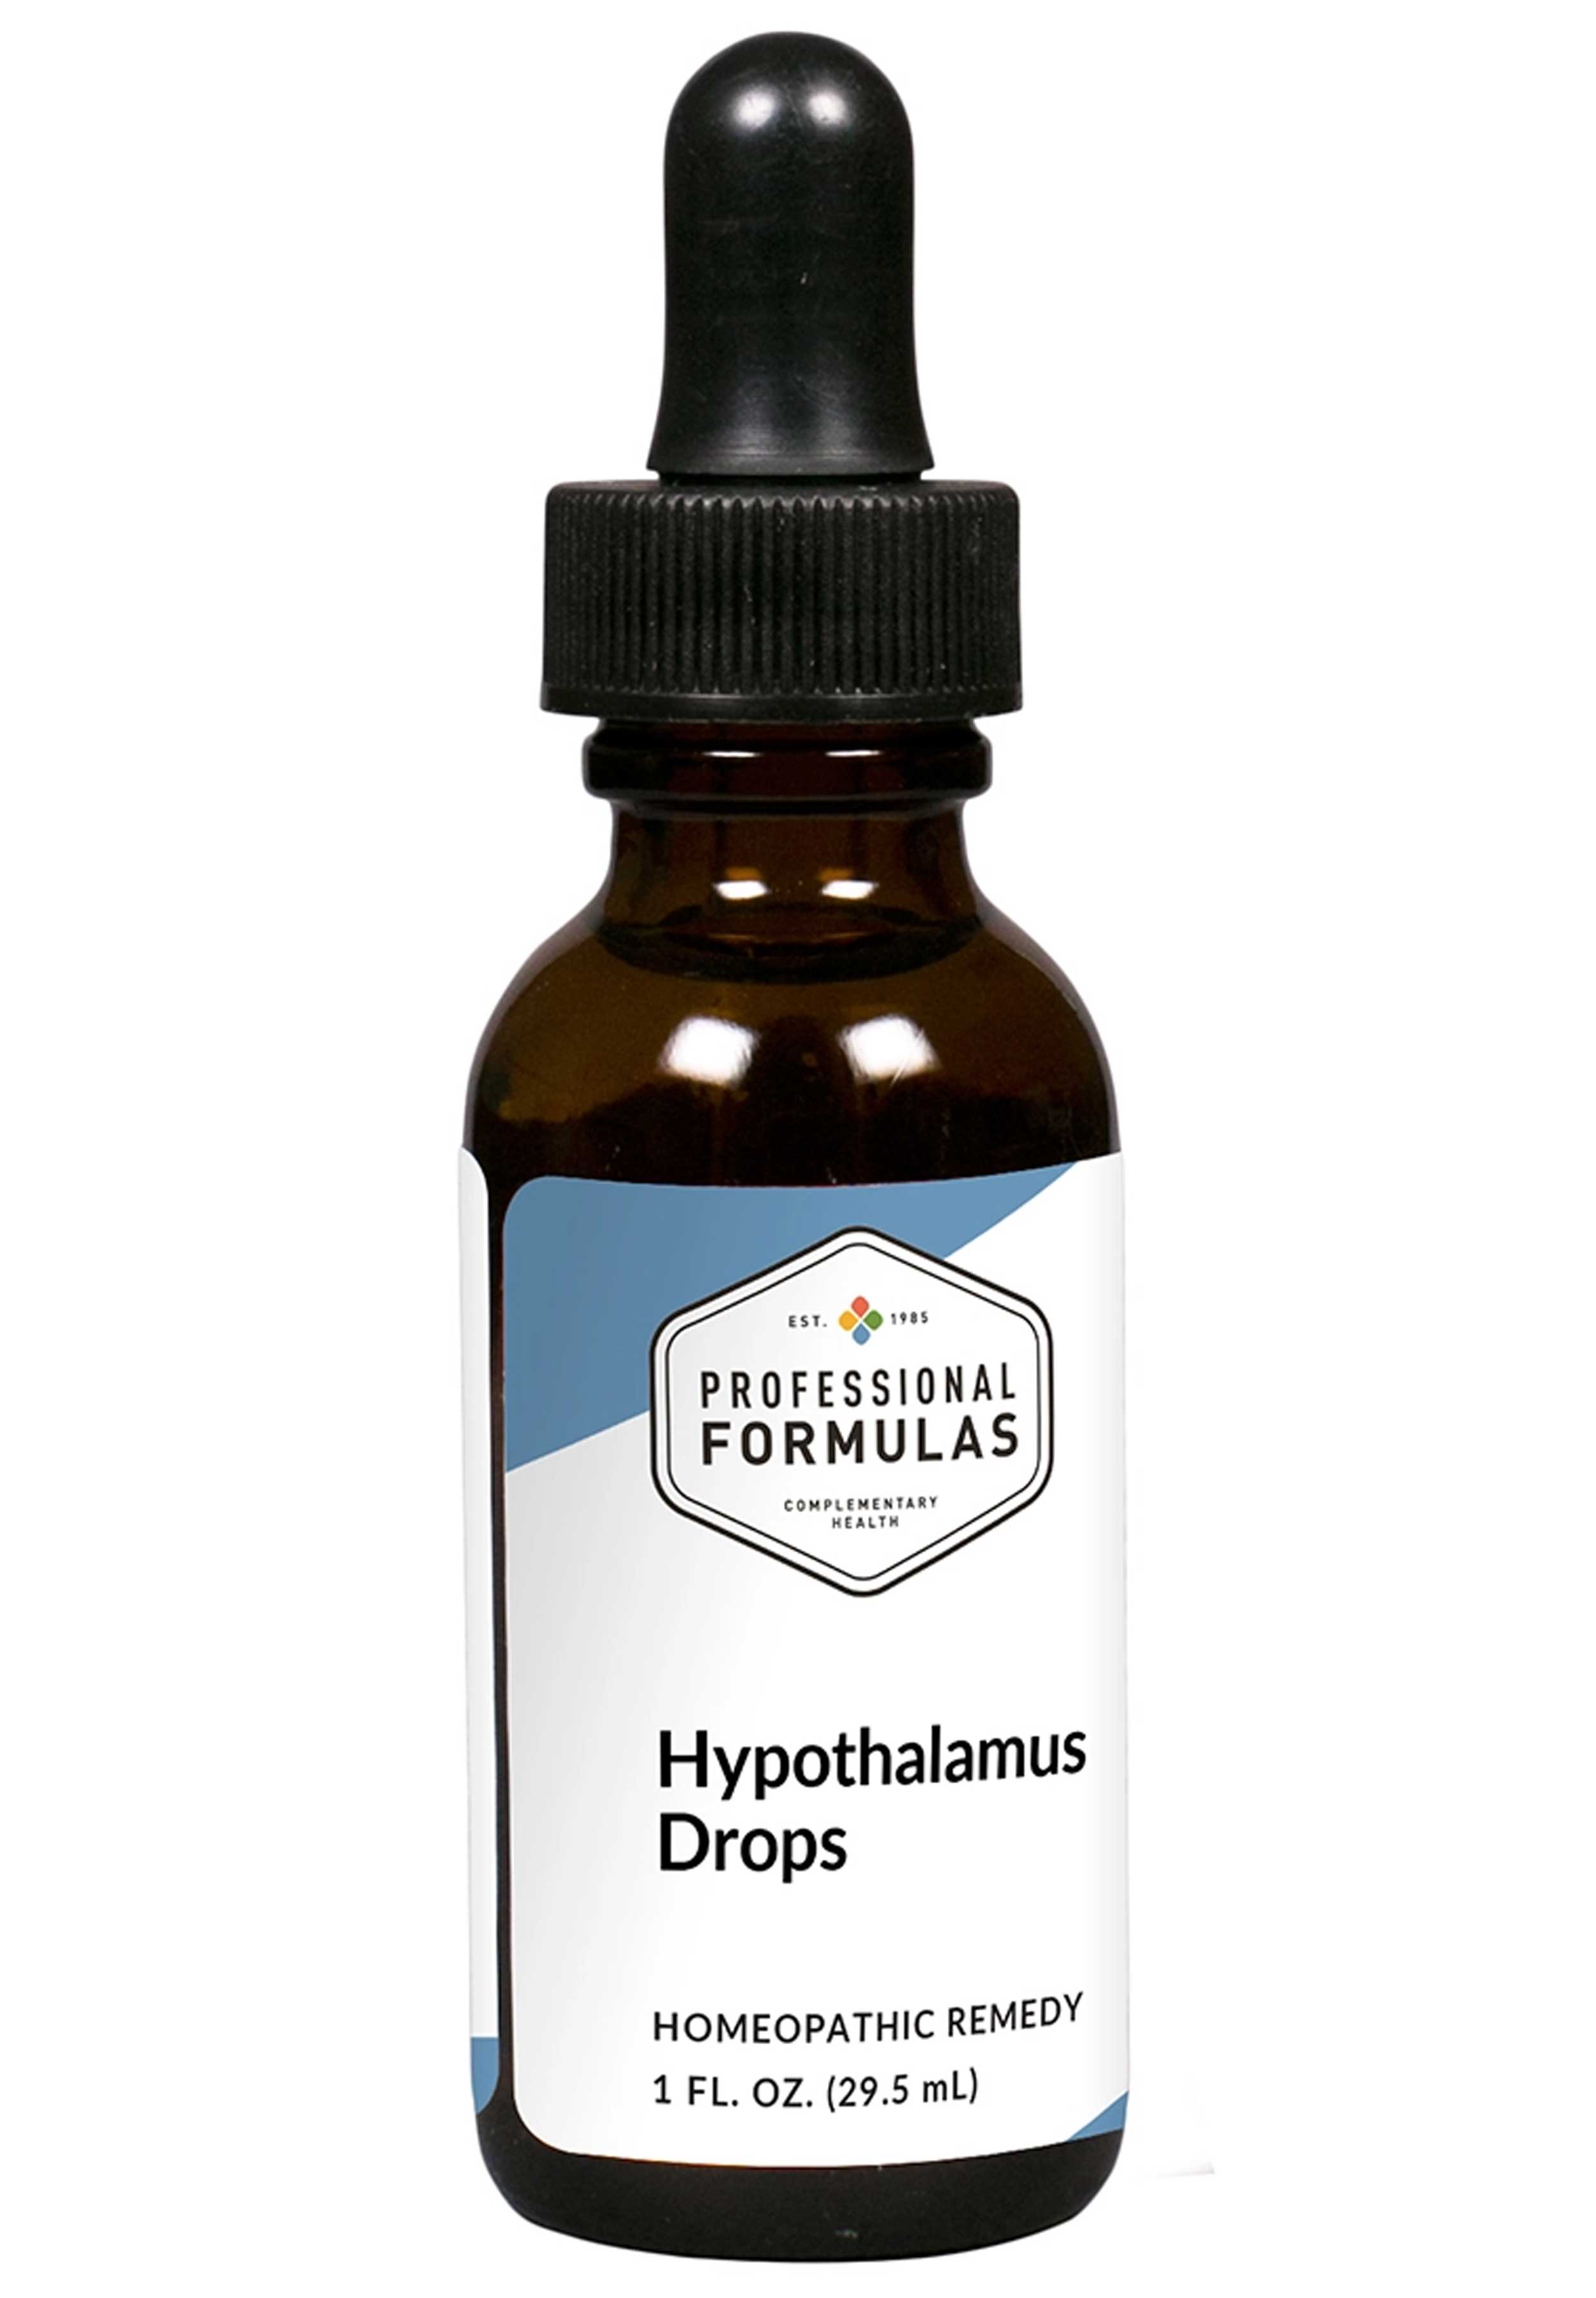 Professional Formulas Hypothalamus Drops